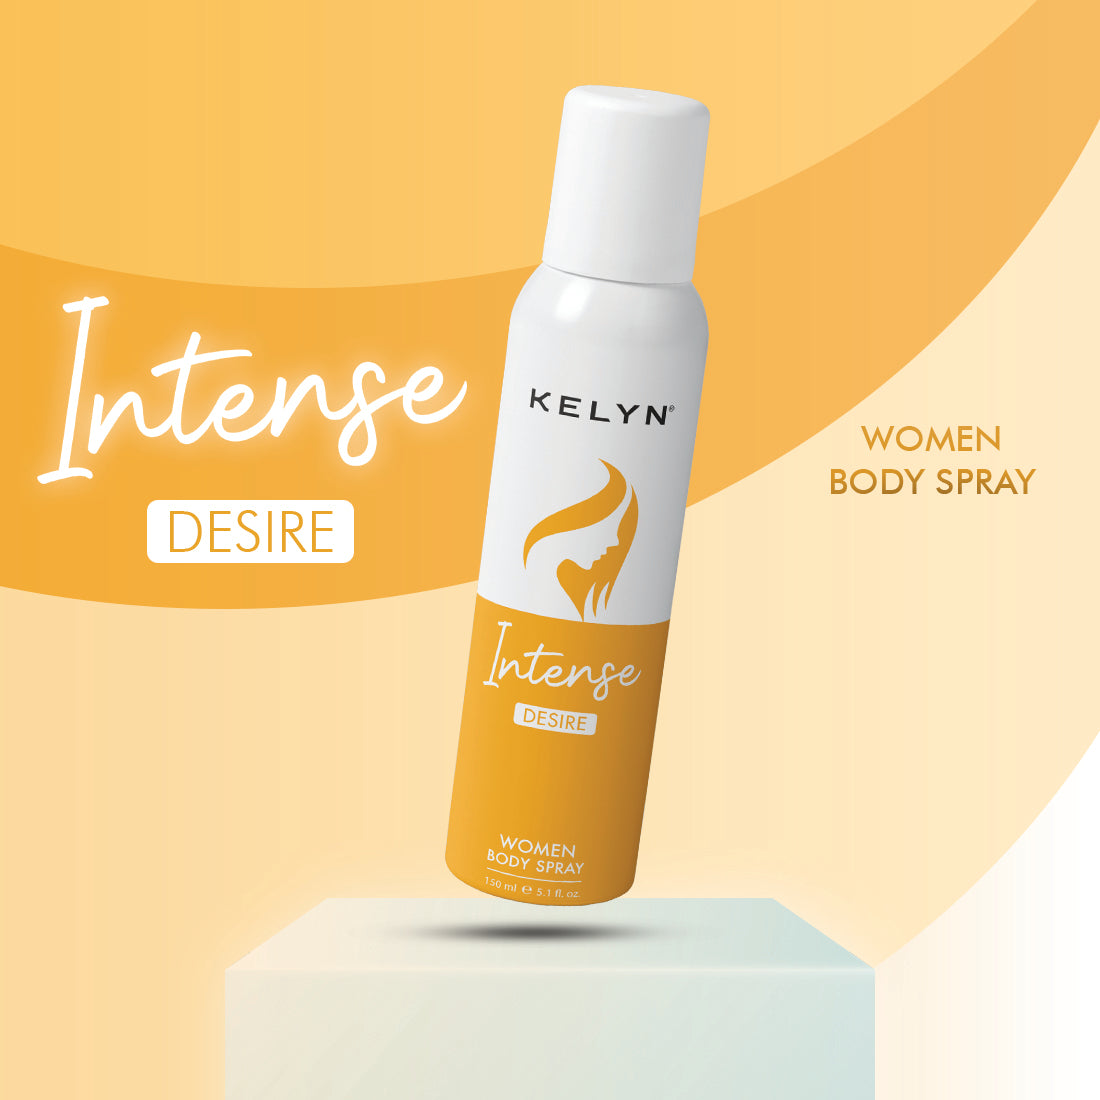 Intense Desire Deodorant for Women Body Spray, 150 ml